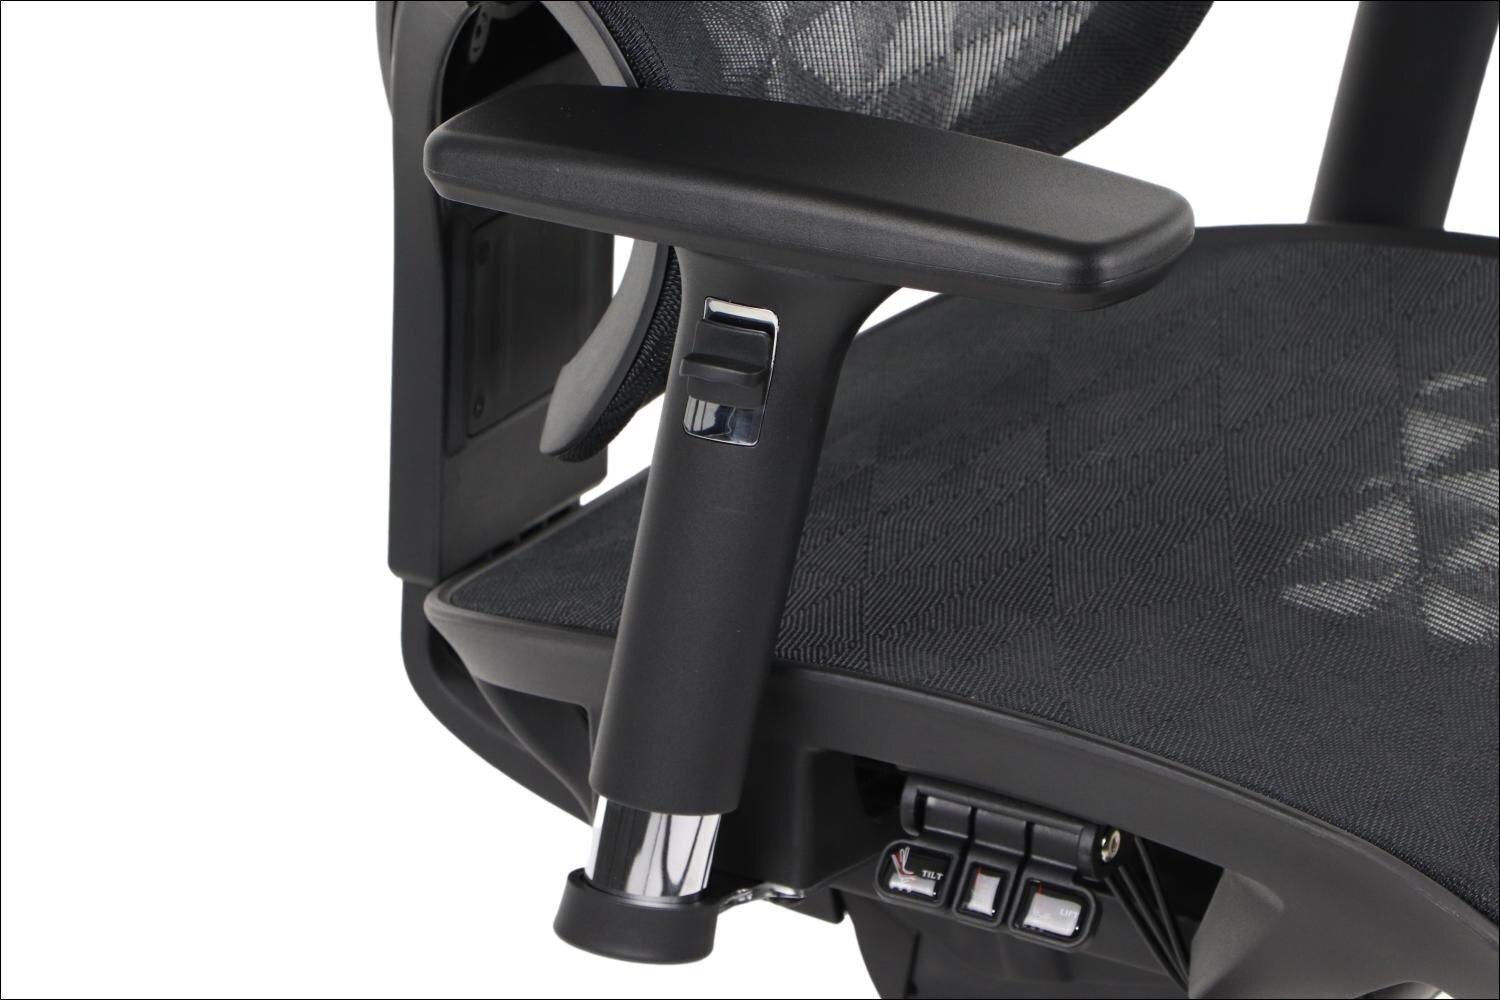 Biuro kėdė ErgoNew S1A, tinklinė sėdynė, juoda цена и информация | Biuro kėdės | pigu.lt